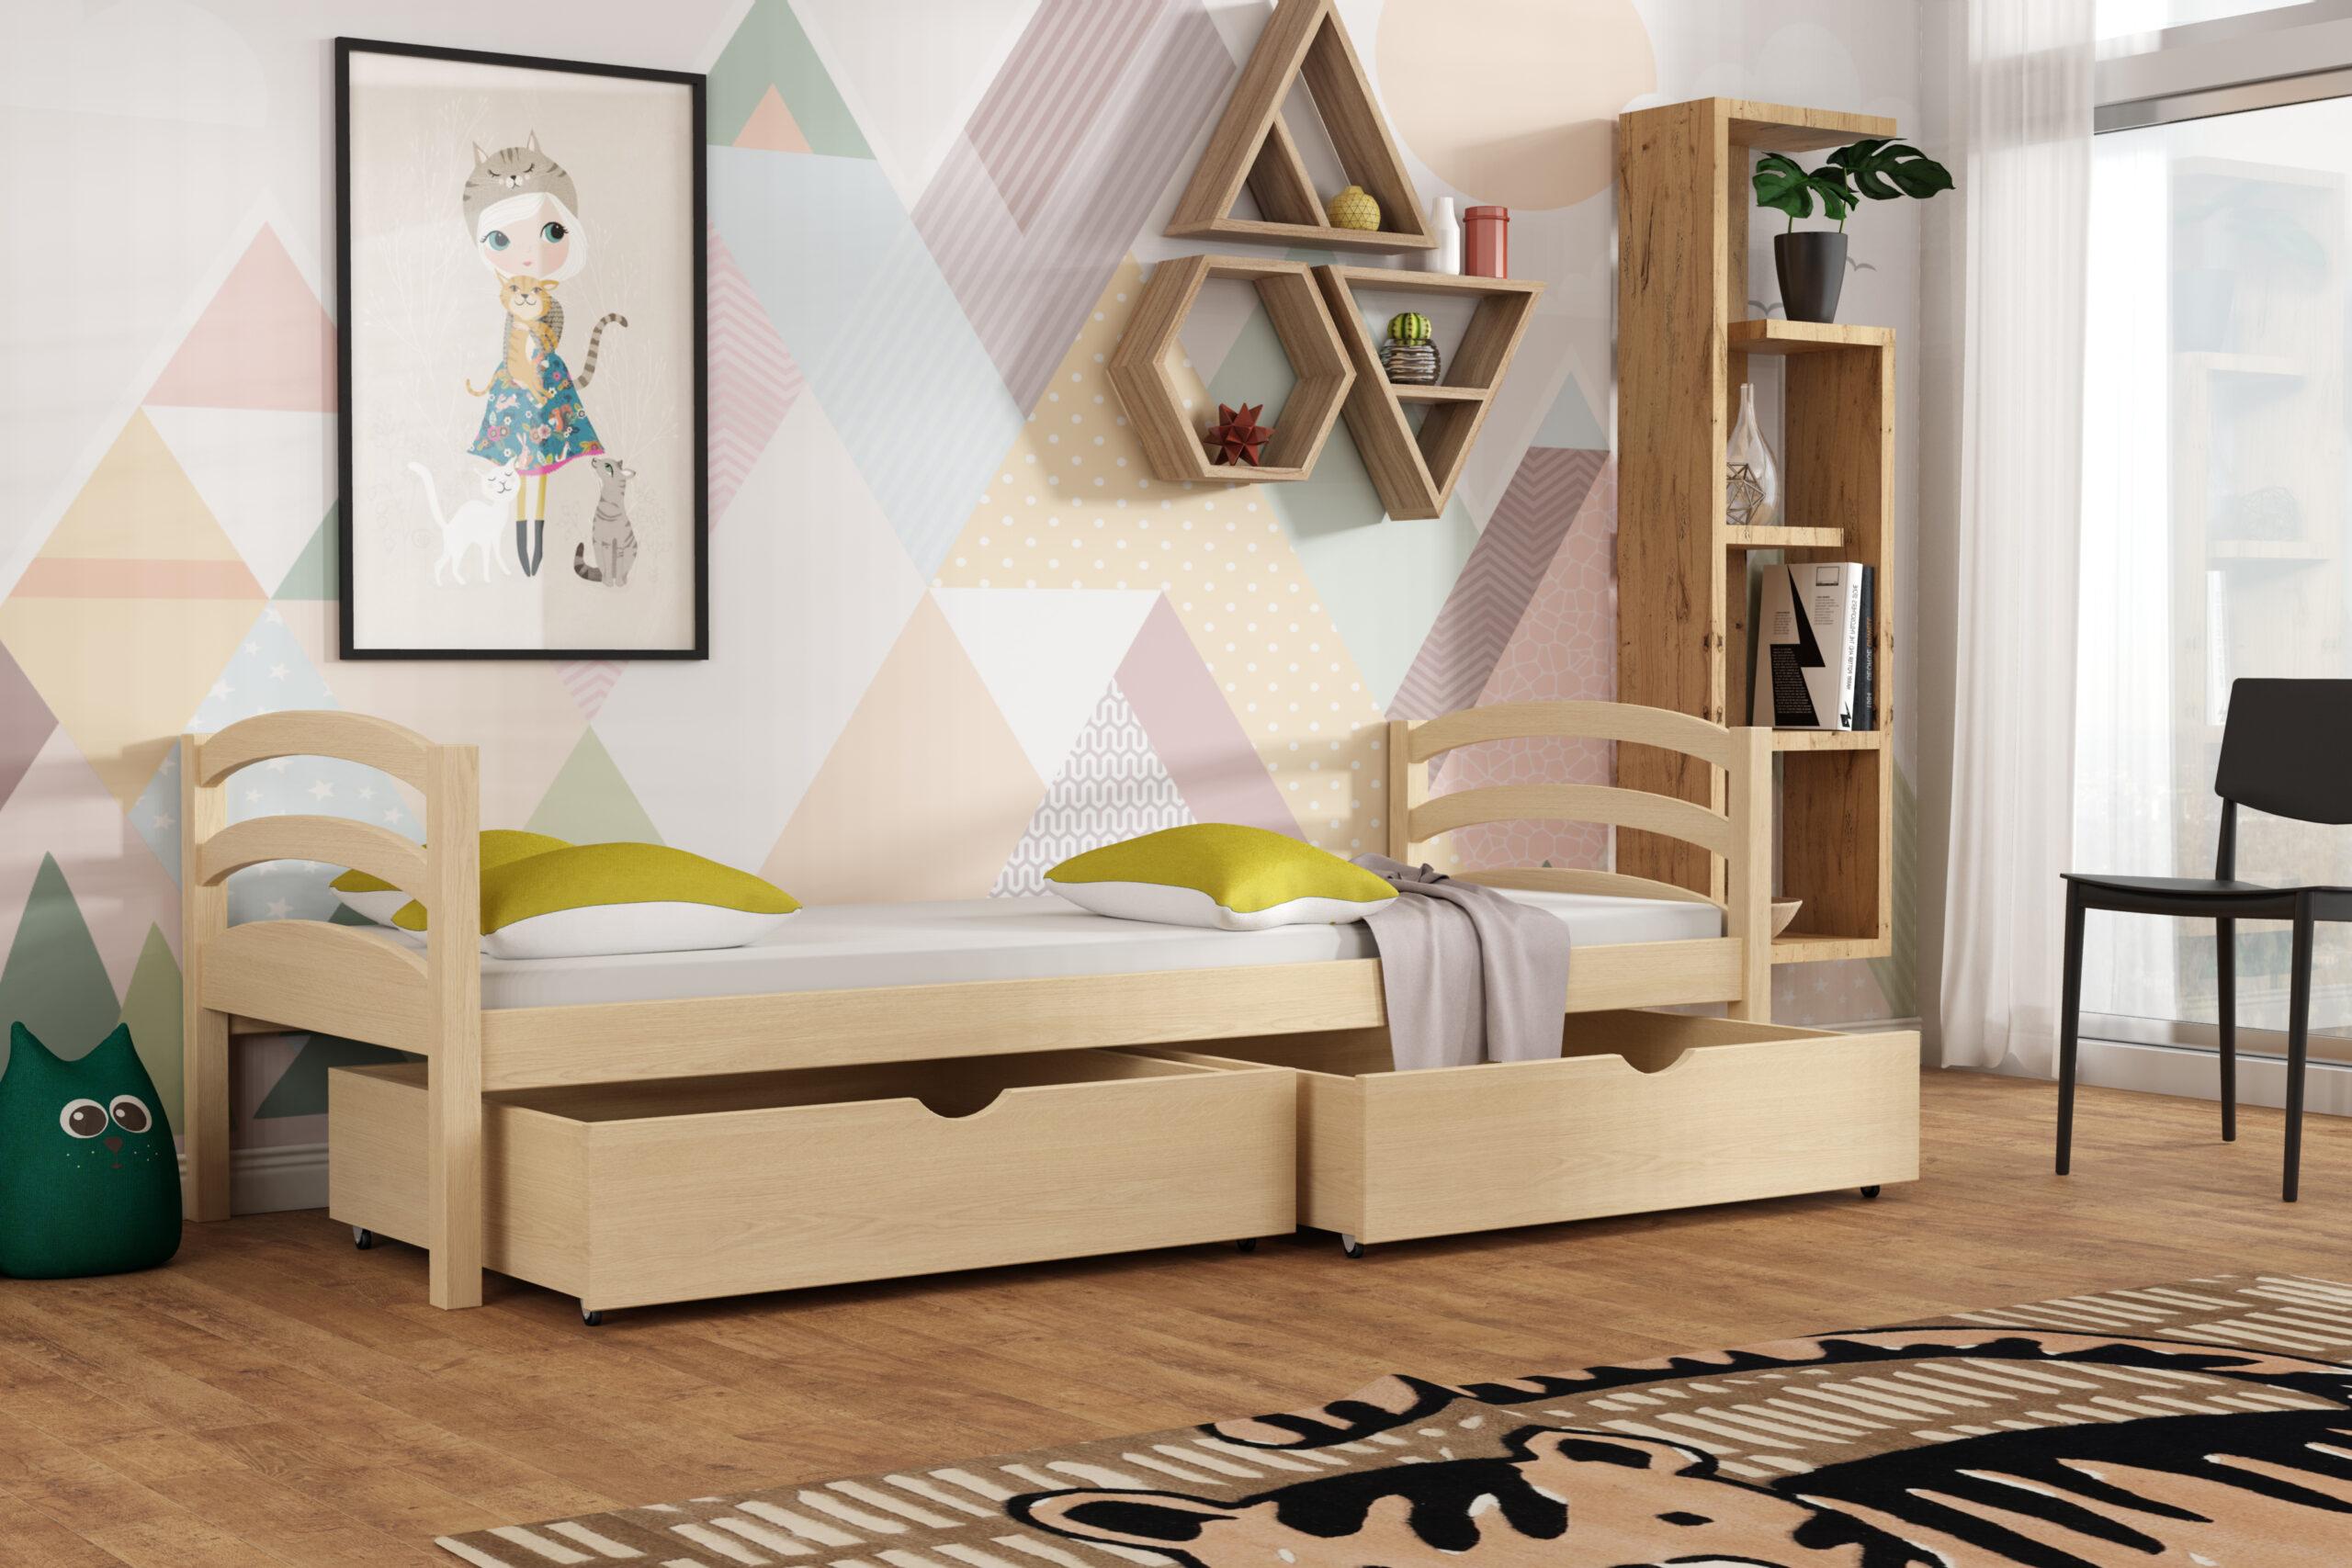 Dětská postel TEVANO KIDBED ONE ze dřeva + rošt Barva: surové dřevo, Rozměr: 80 x 200 cm, Zásuvky: ano